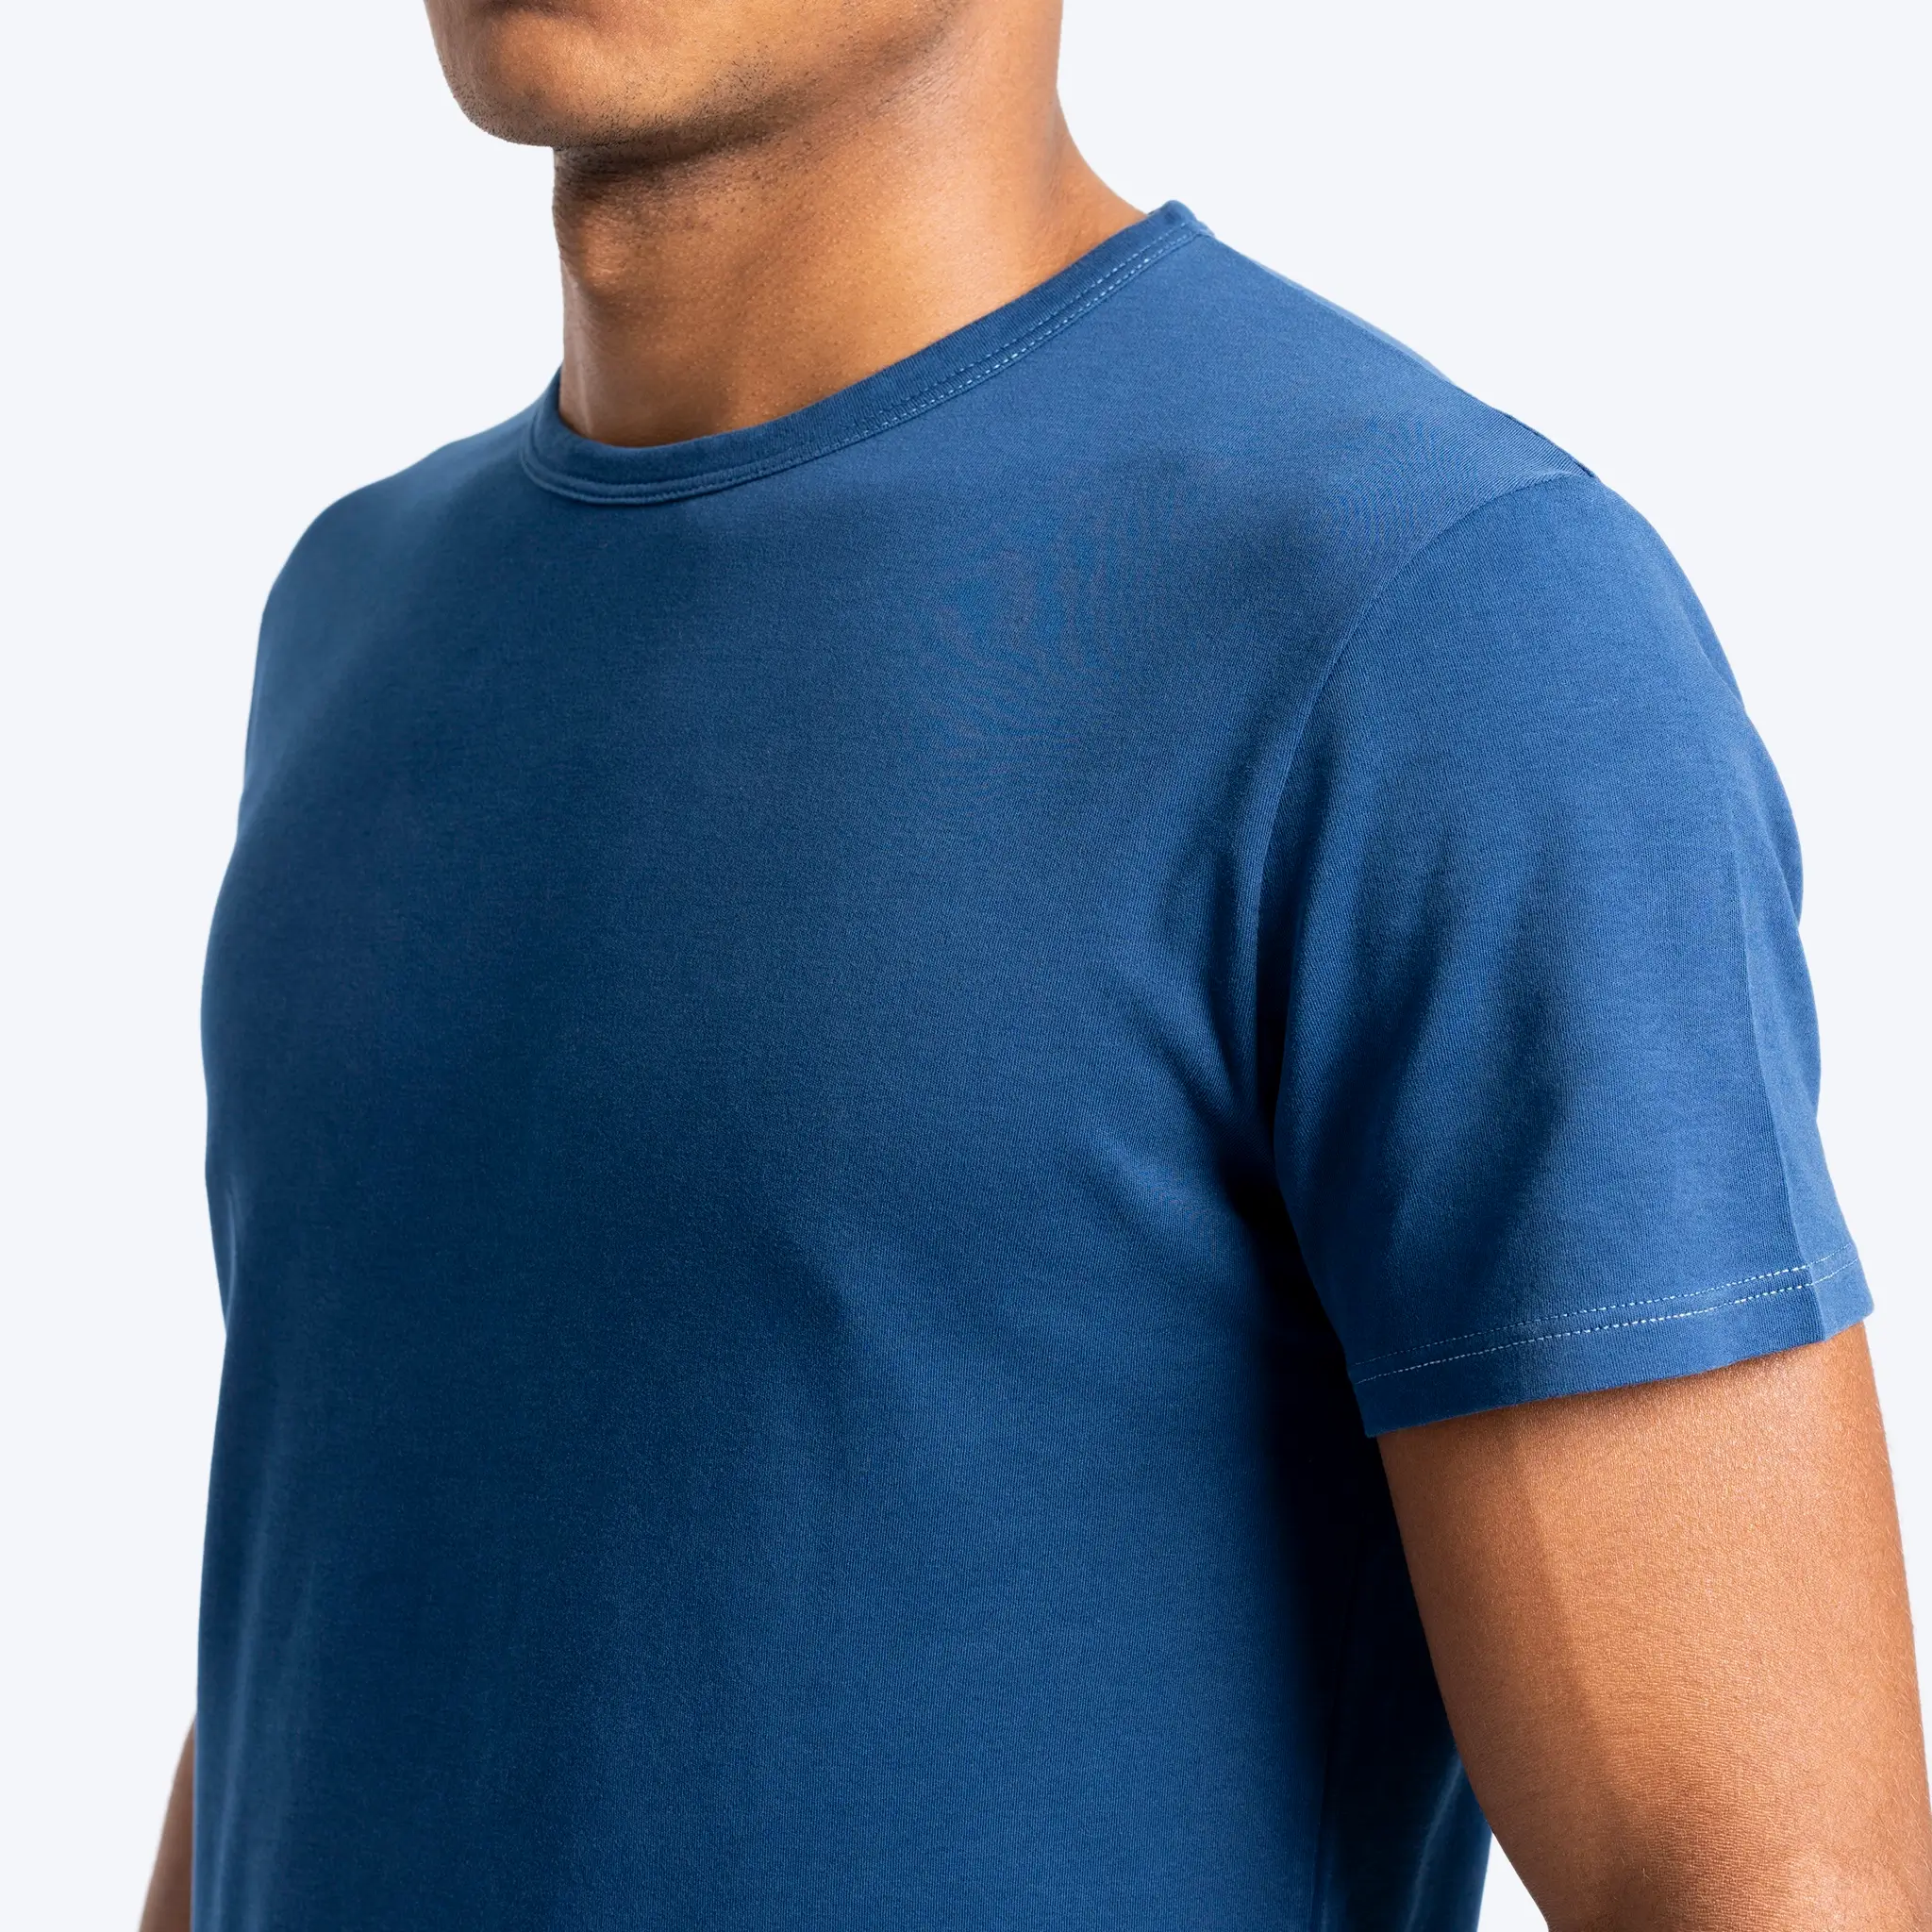 mens versatile design tshirt crew neck color natural blue